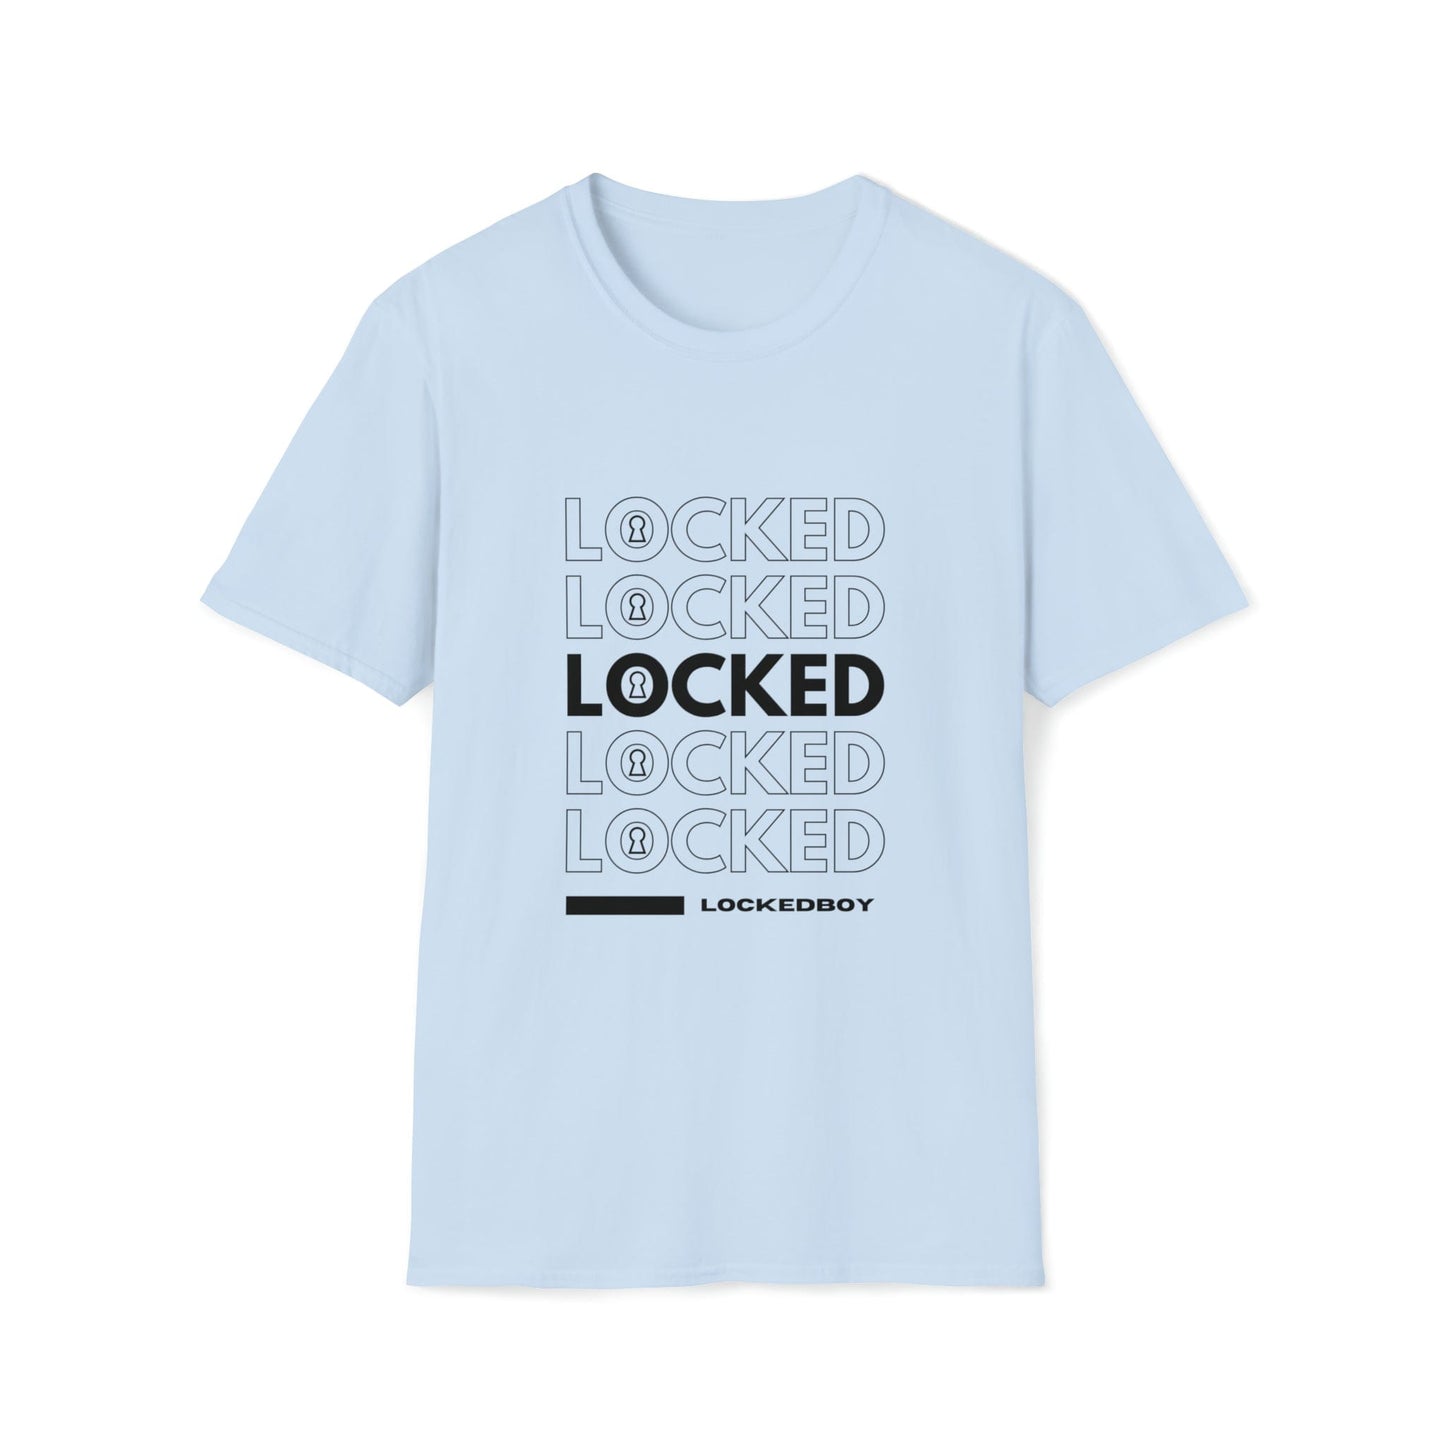 T-Shirt Light Blue / S LOCKED Inspo (black text) - Chastity Shirts by LockedBoy Athletics LEATHERDADDY BATOR